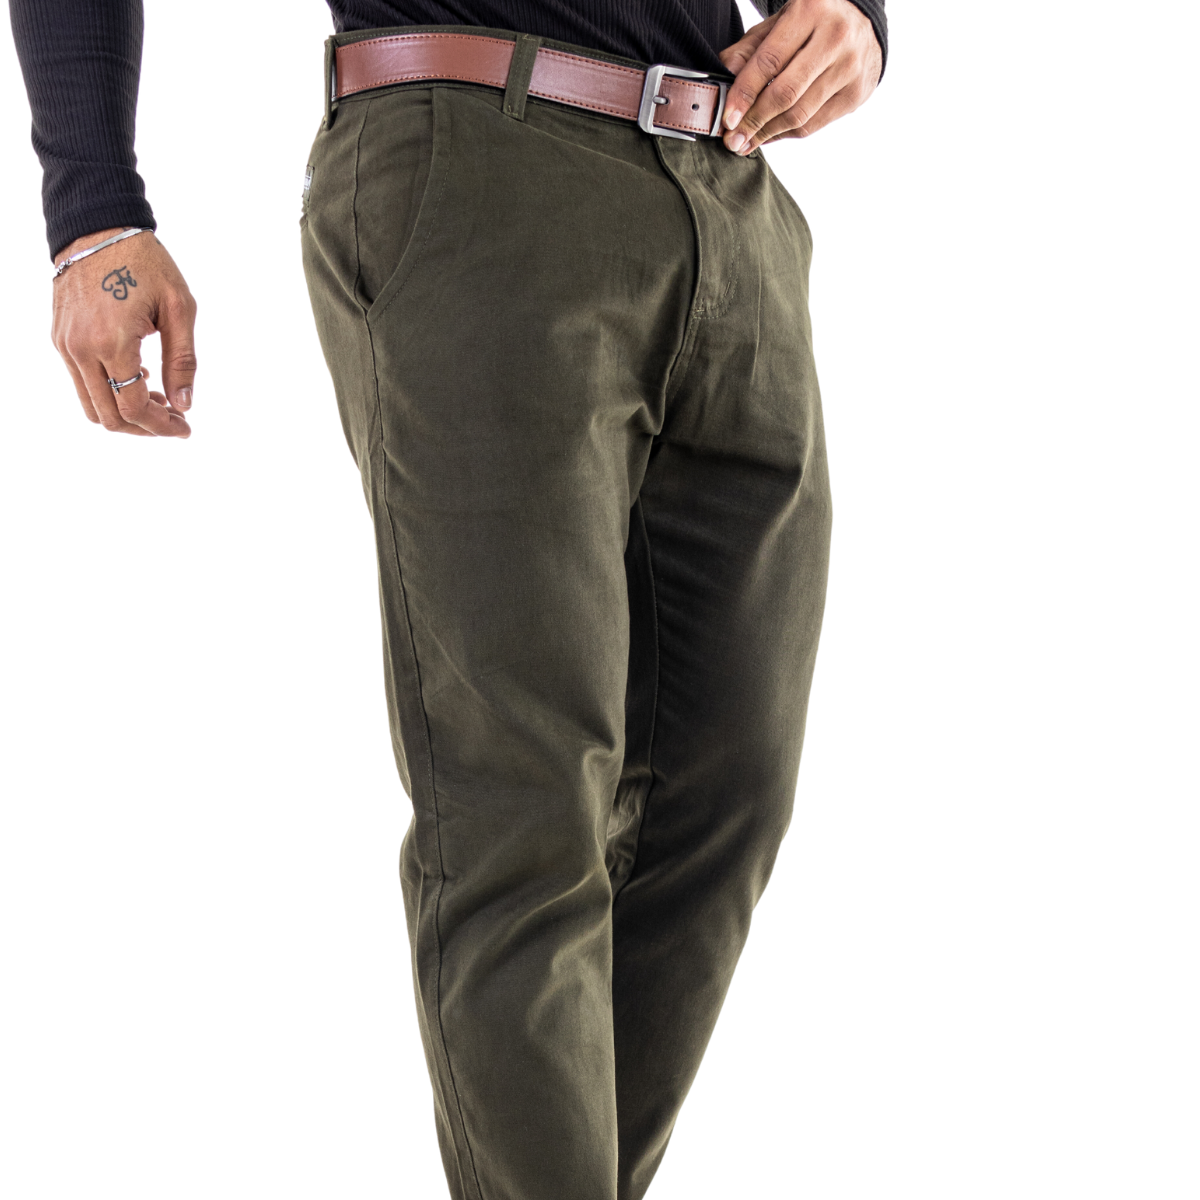 Calça Masculina - Skinny Sarja - Verde Militar